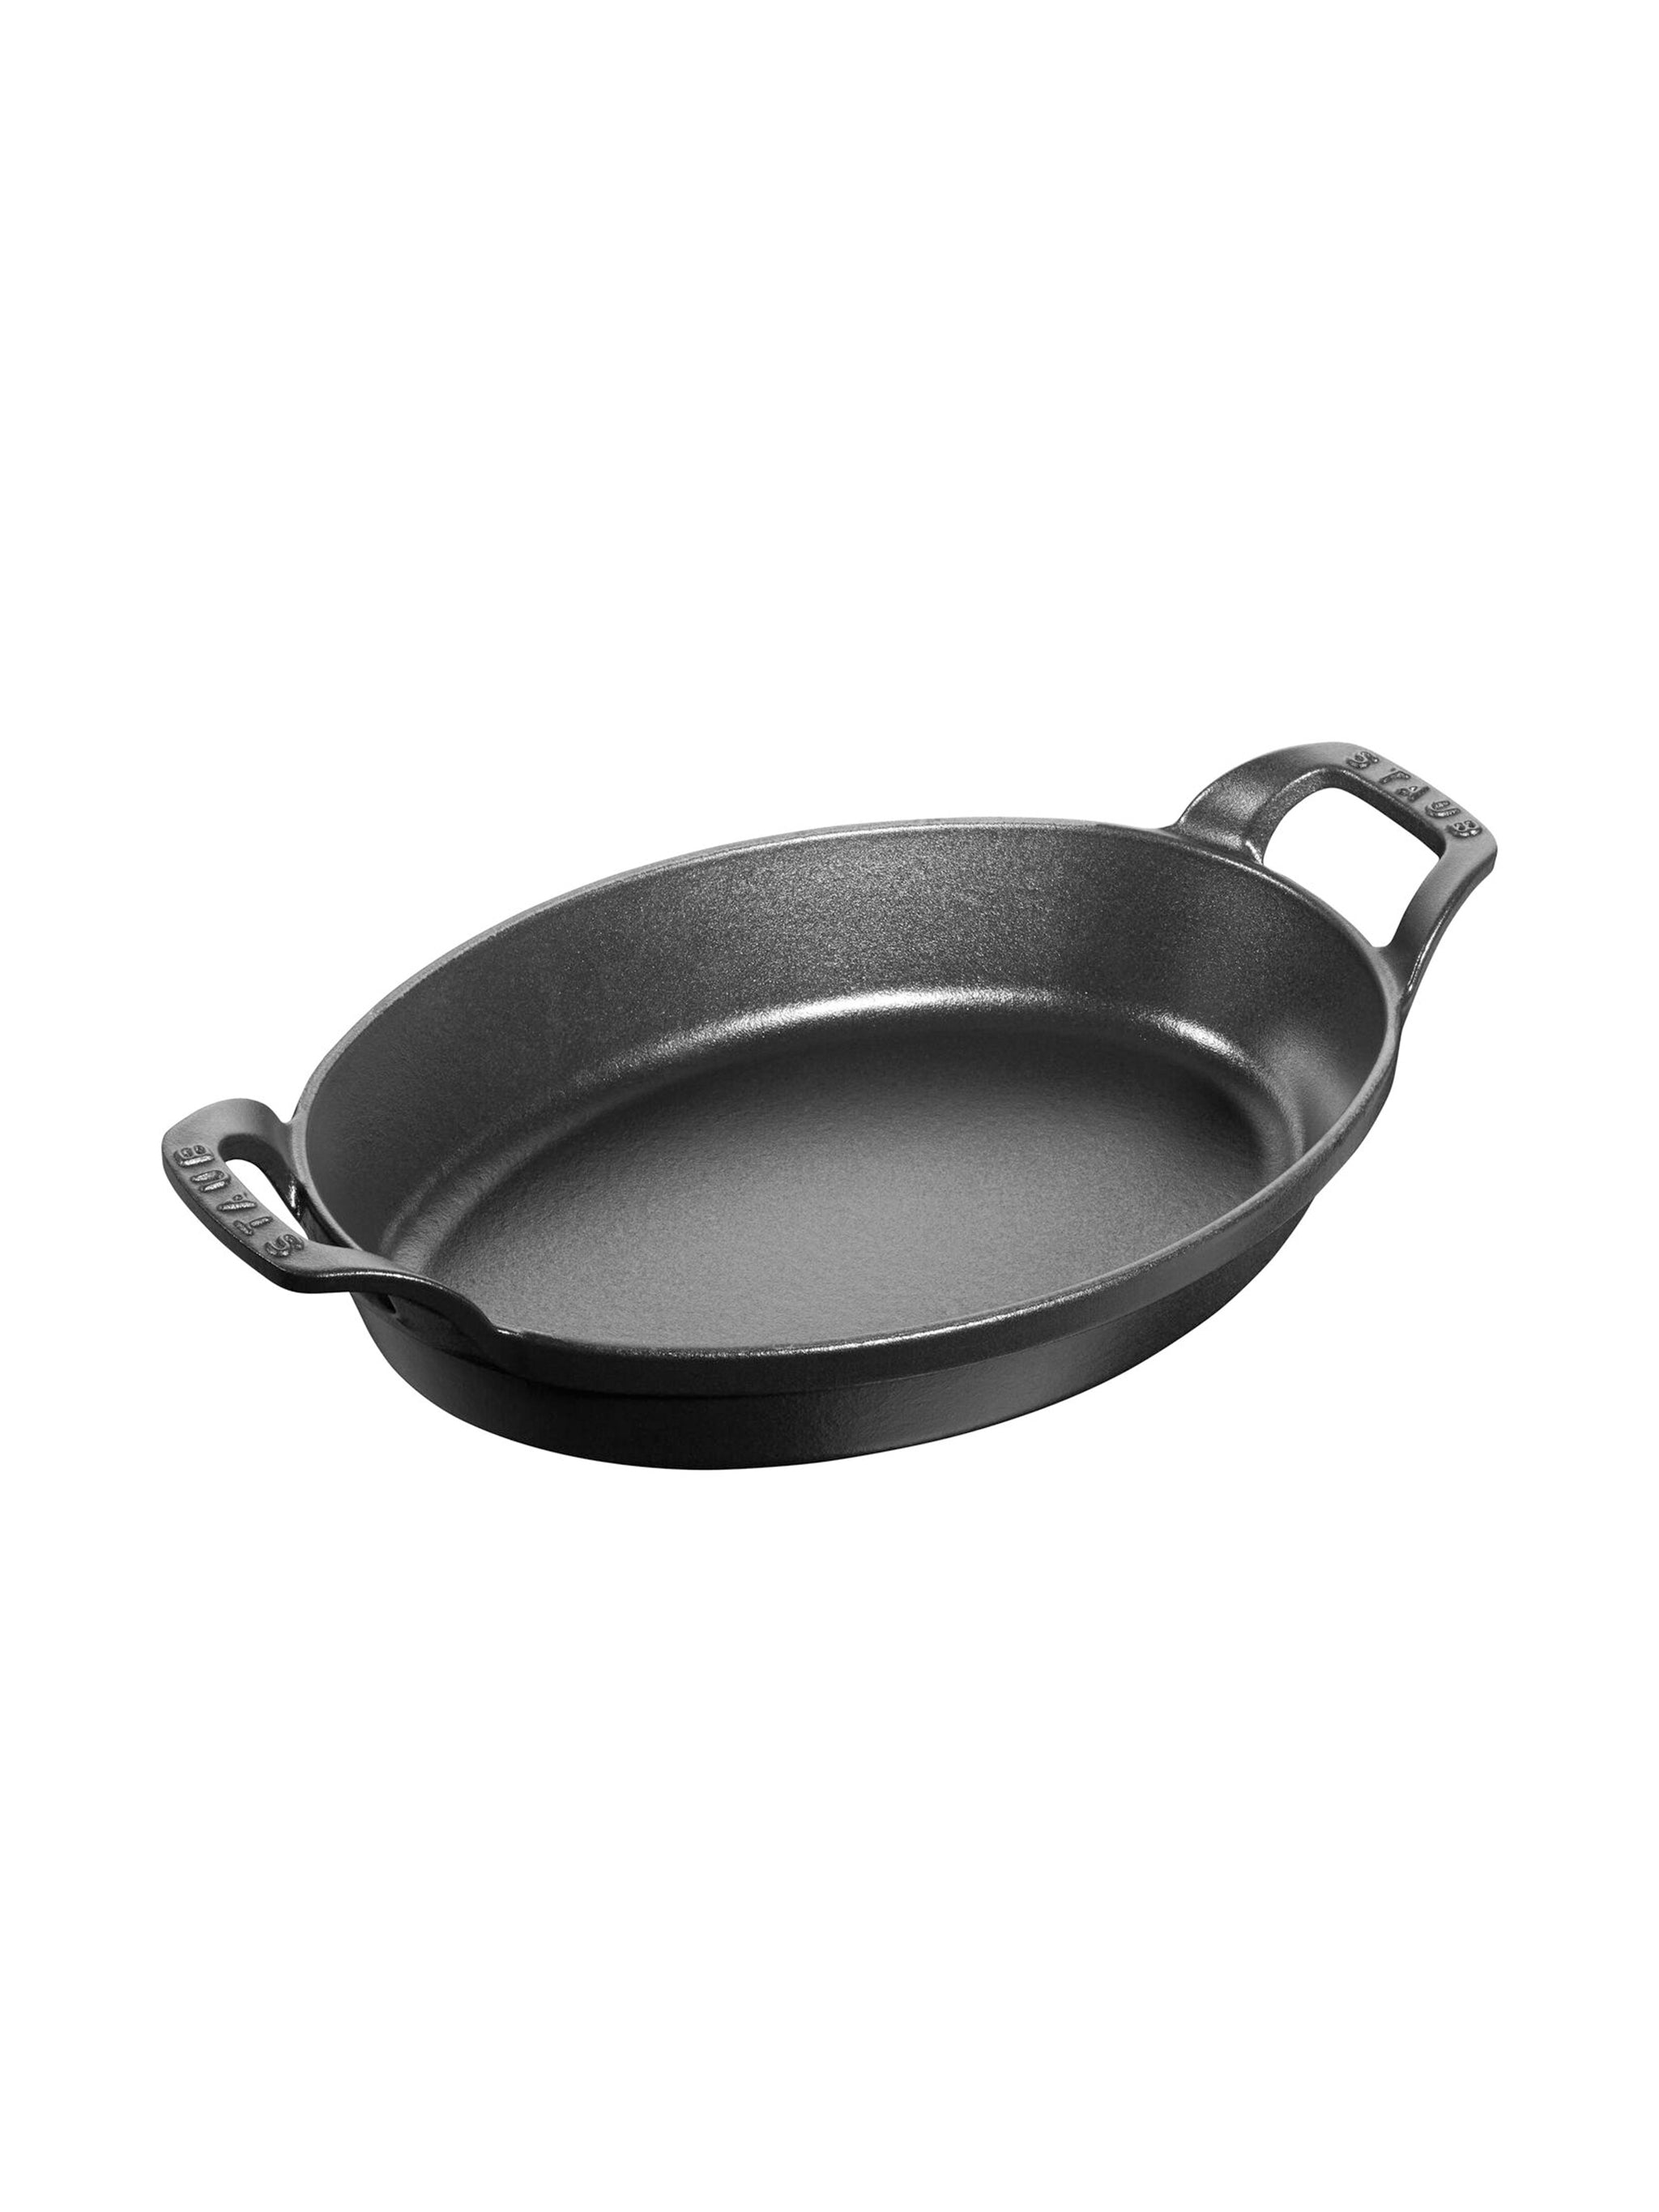 9.5 x 6.5 Oval Enamel Cast Iron Baking Dish